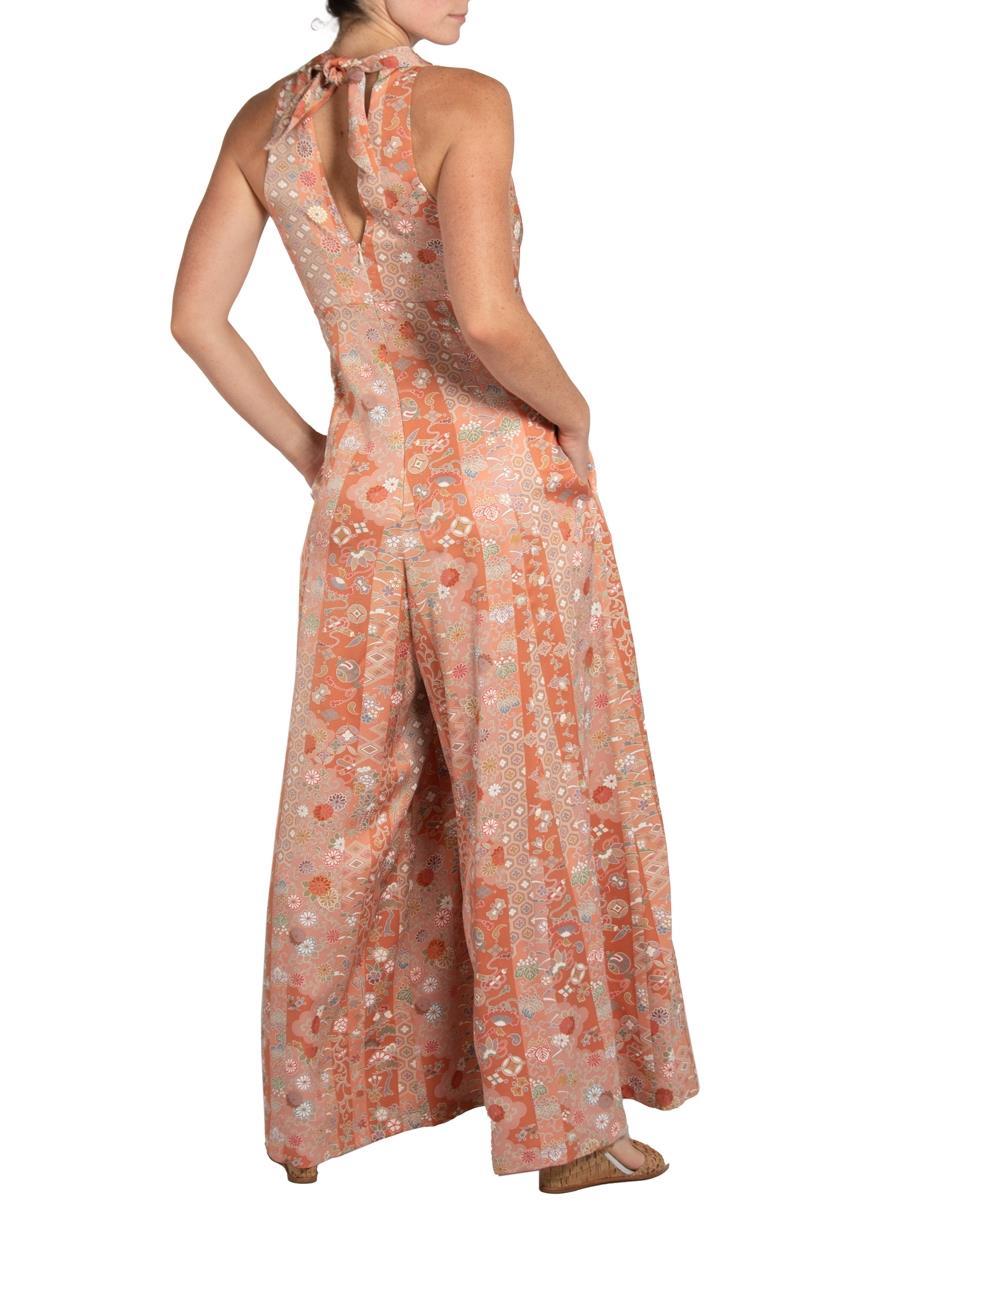 MORPHEW COLLECTION Copper Coral Japanese Kimono Silk M/L Jumpsuit For Sale 2